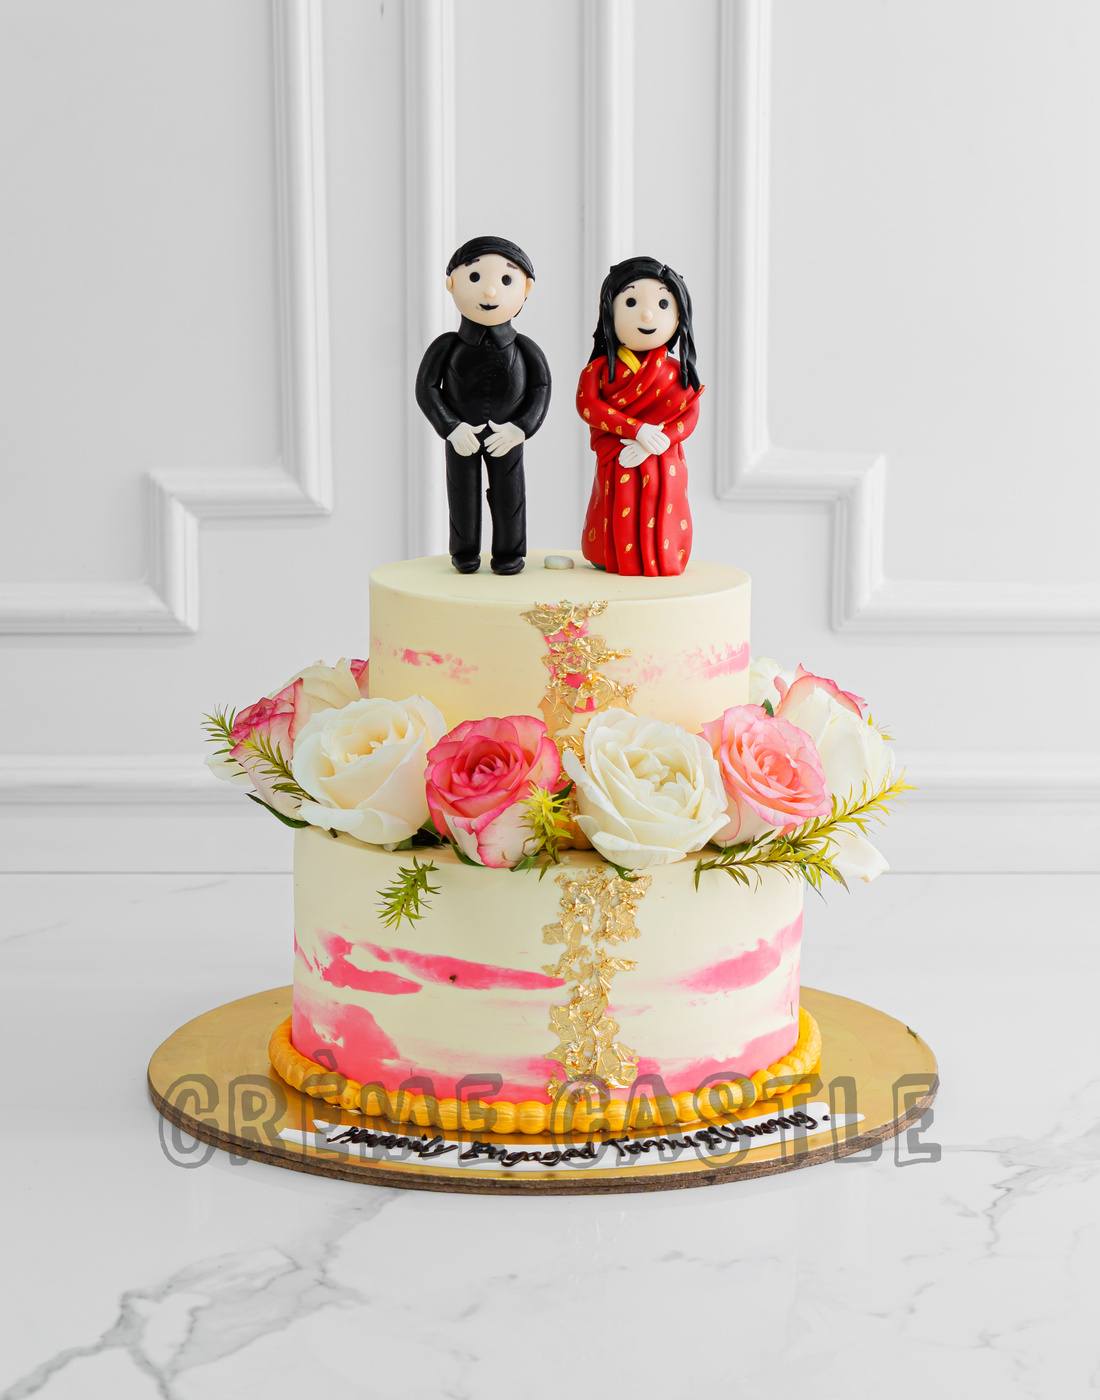 31 Types of Wedding Cakes to Know | Wedding Spot Blog